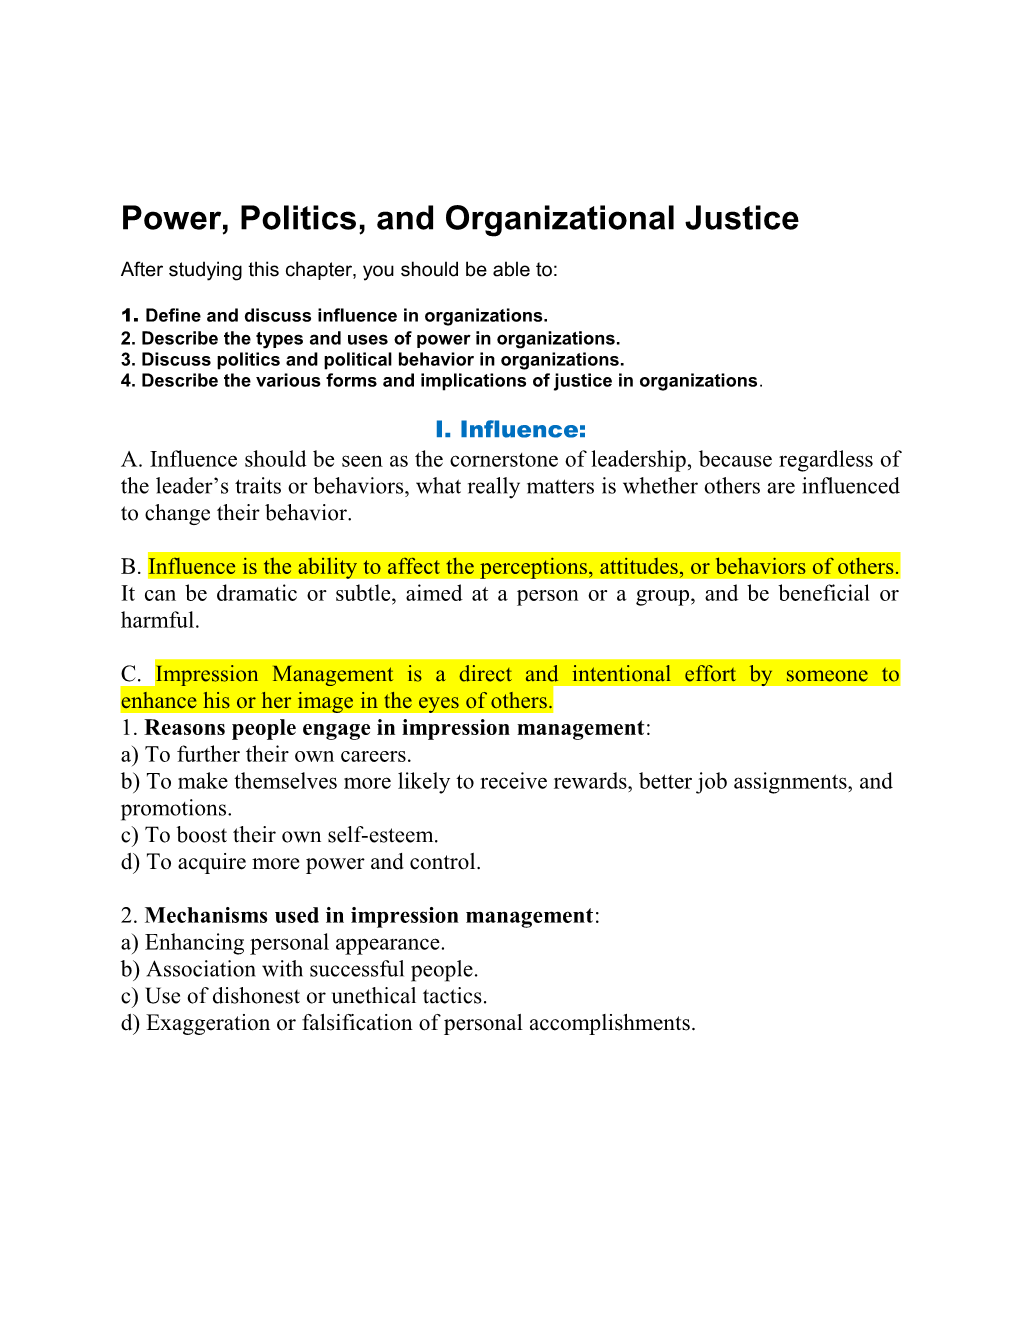 Power, Politics, and Organizational Justice